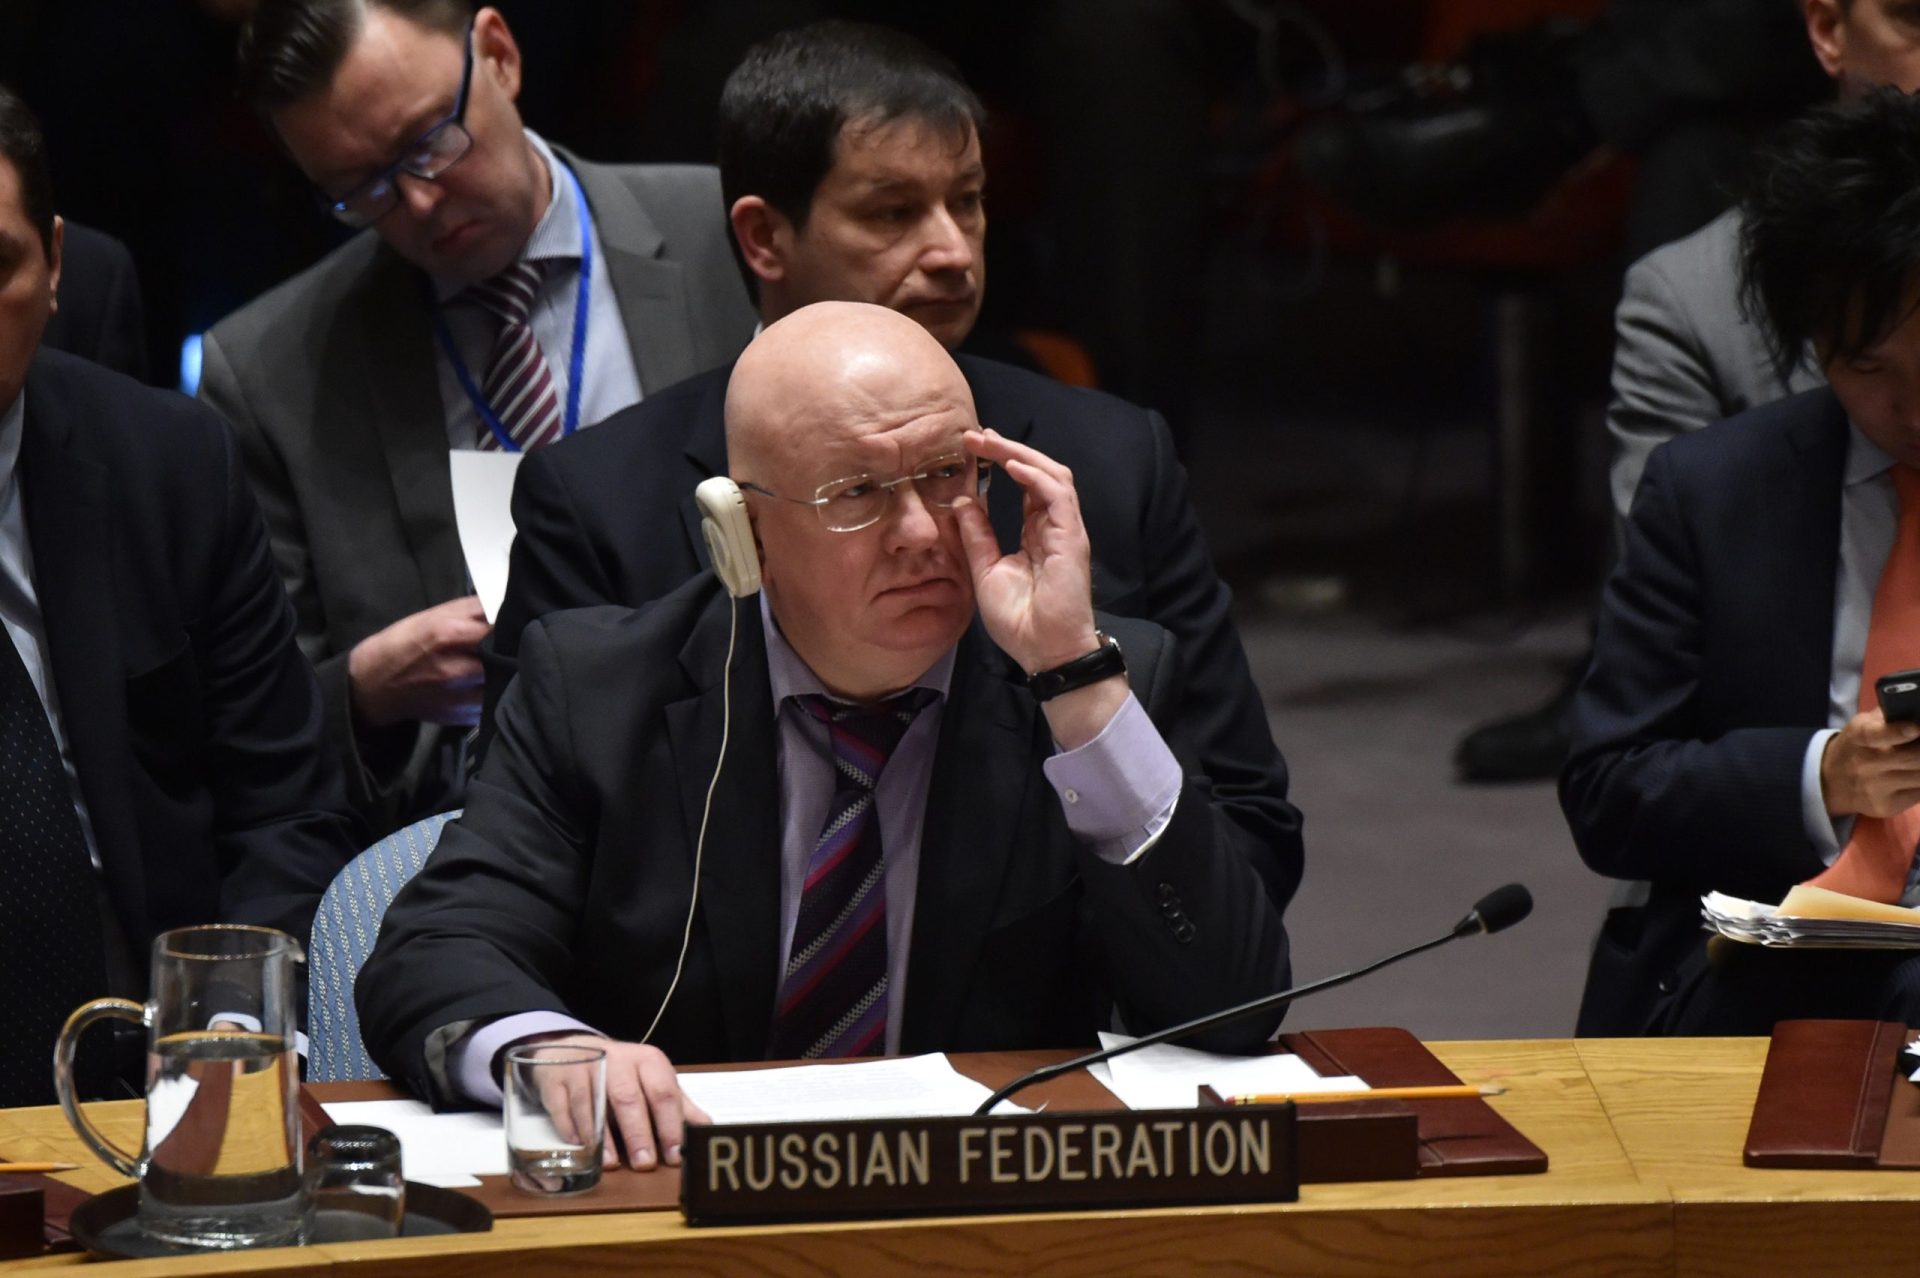 Rússia deixa alerta aos EUA: “A prioridade imediata é evitar o risco de guerra”